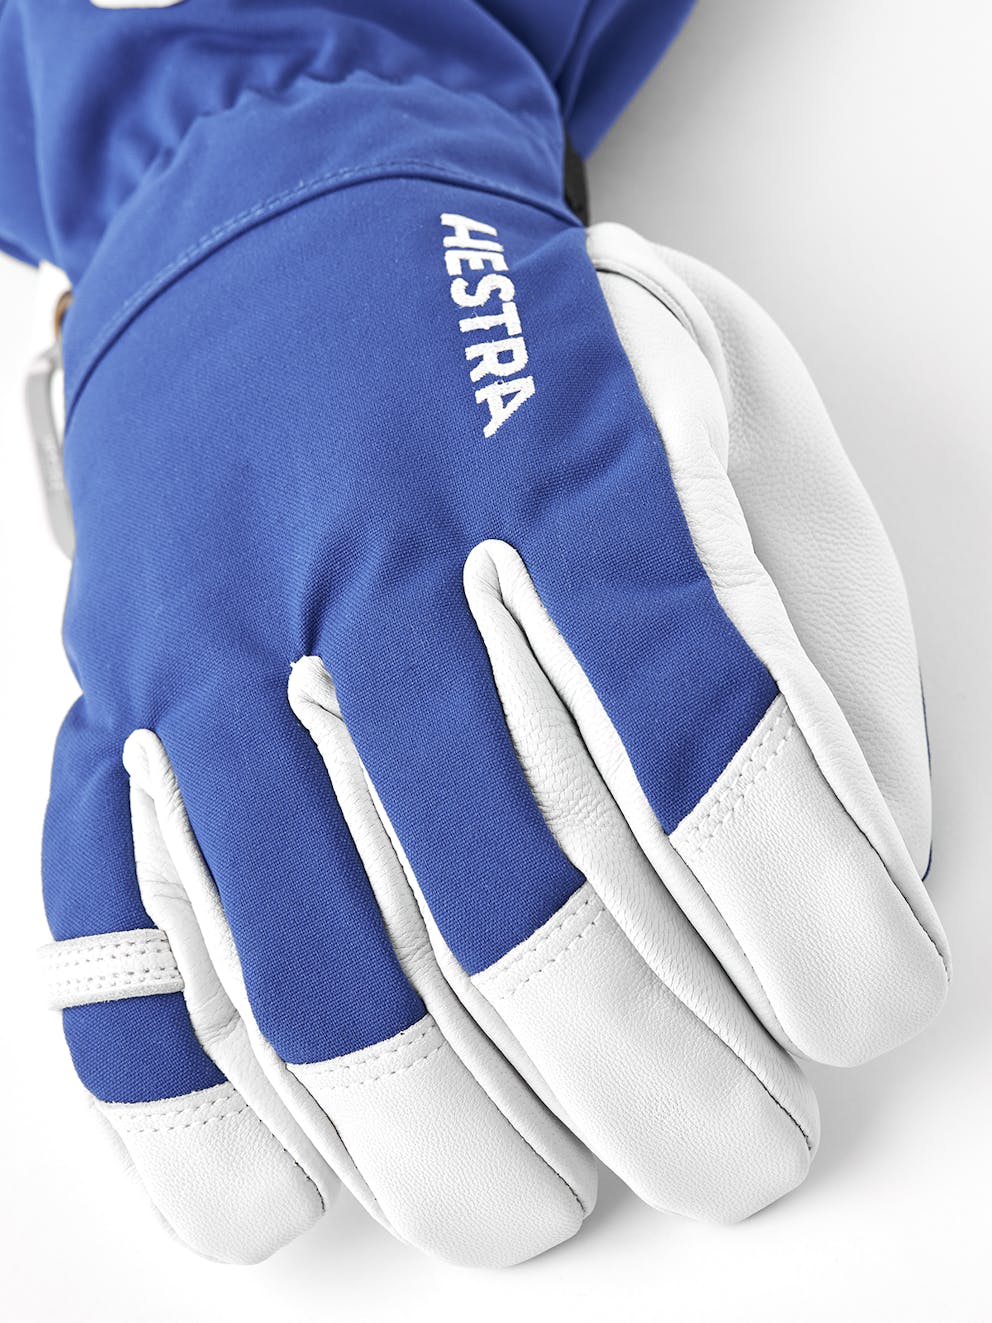 Army Leather Royal | Gloves - Ski blue Hestra Heli